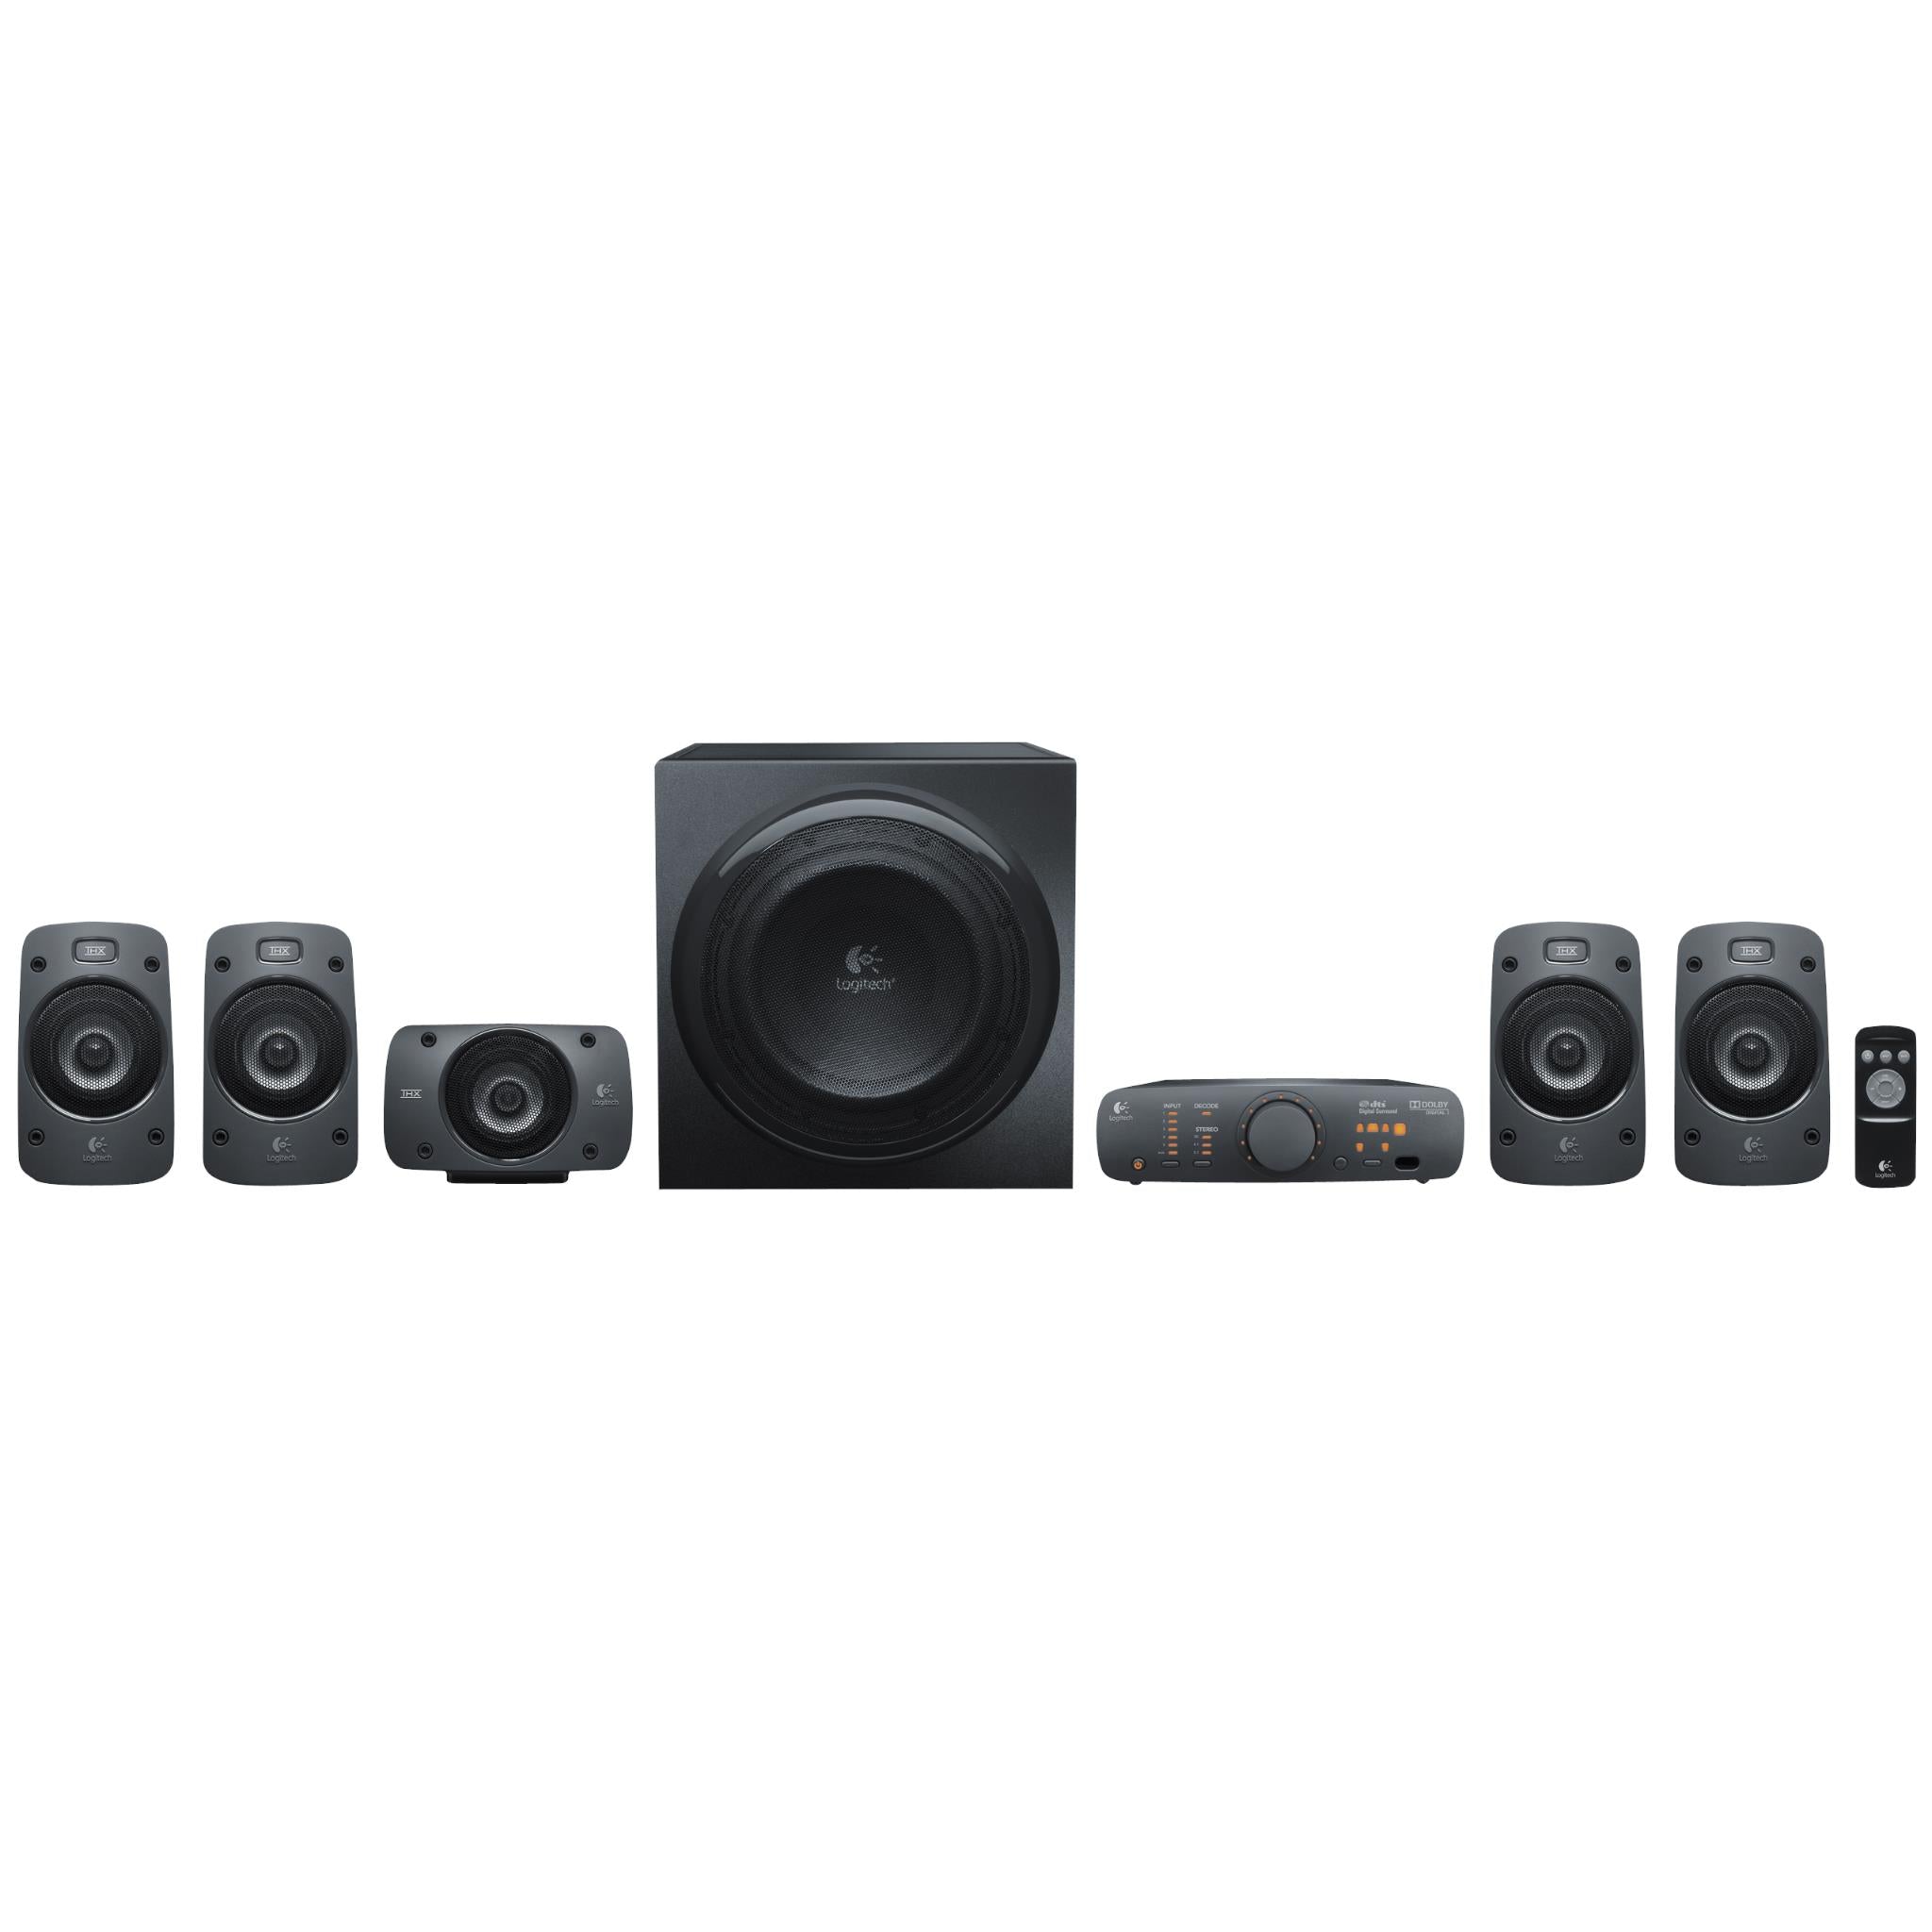  Logitech Z906 5.1 Surround Sound Speaker System - THX